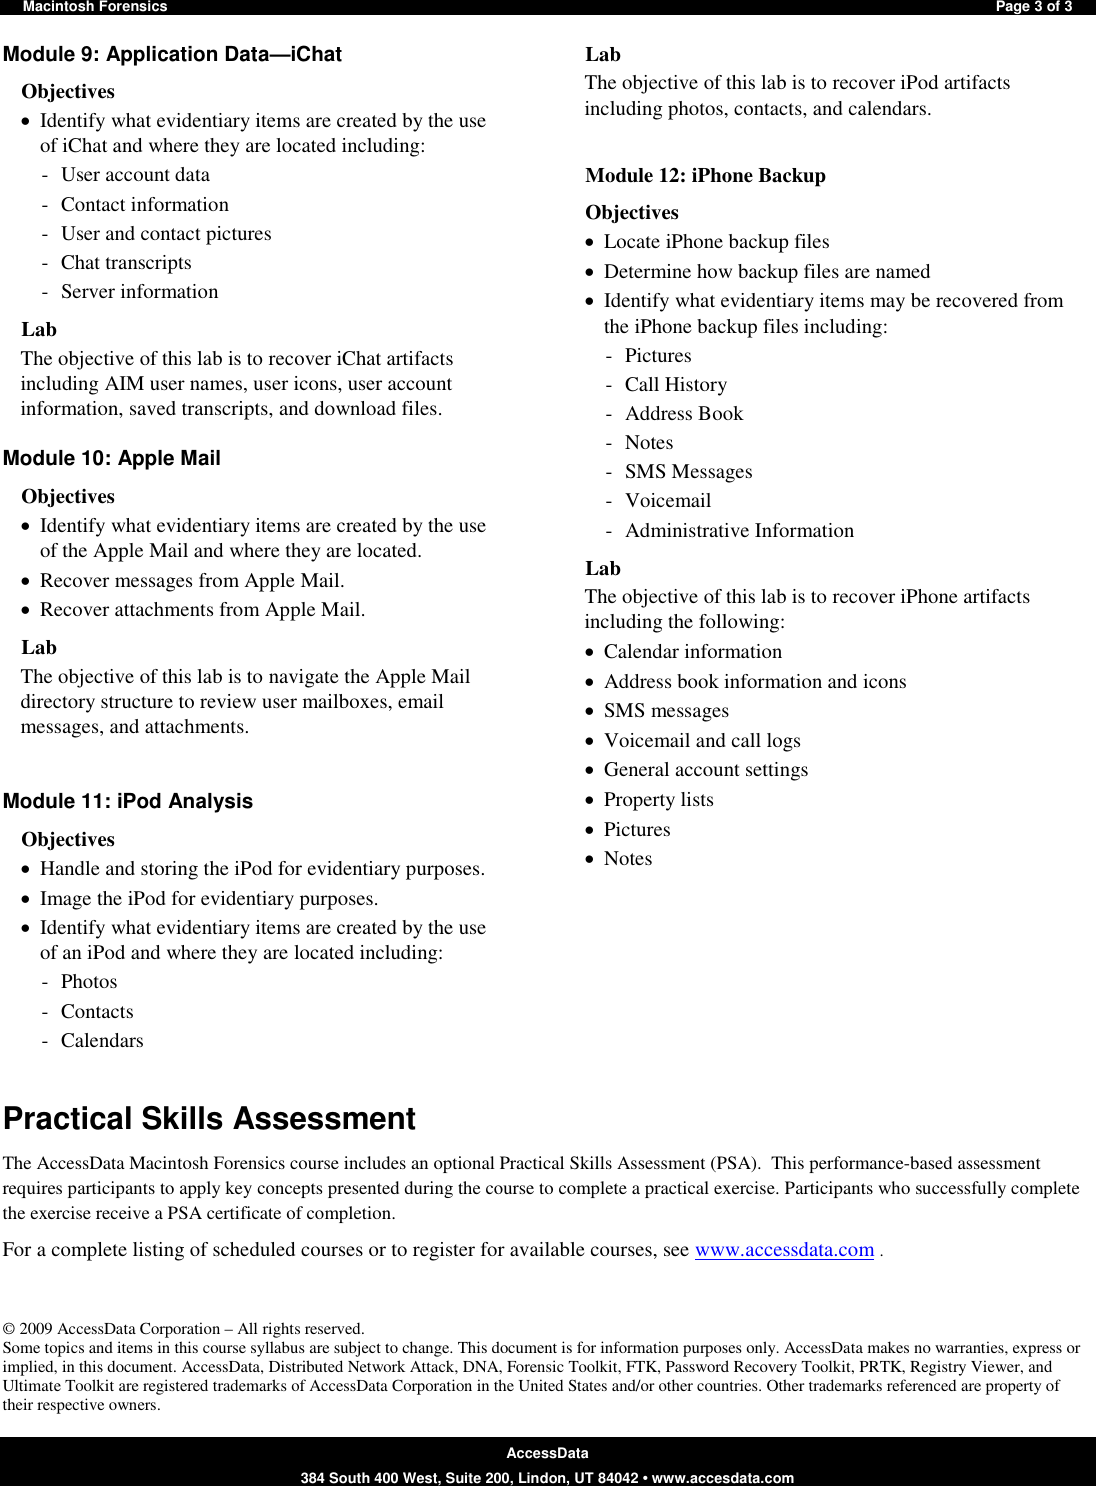 Page 3 of 3 - AccessData Forensic BootCamp  Macintosh Forensics Syllabus